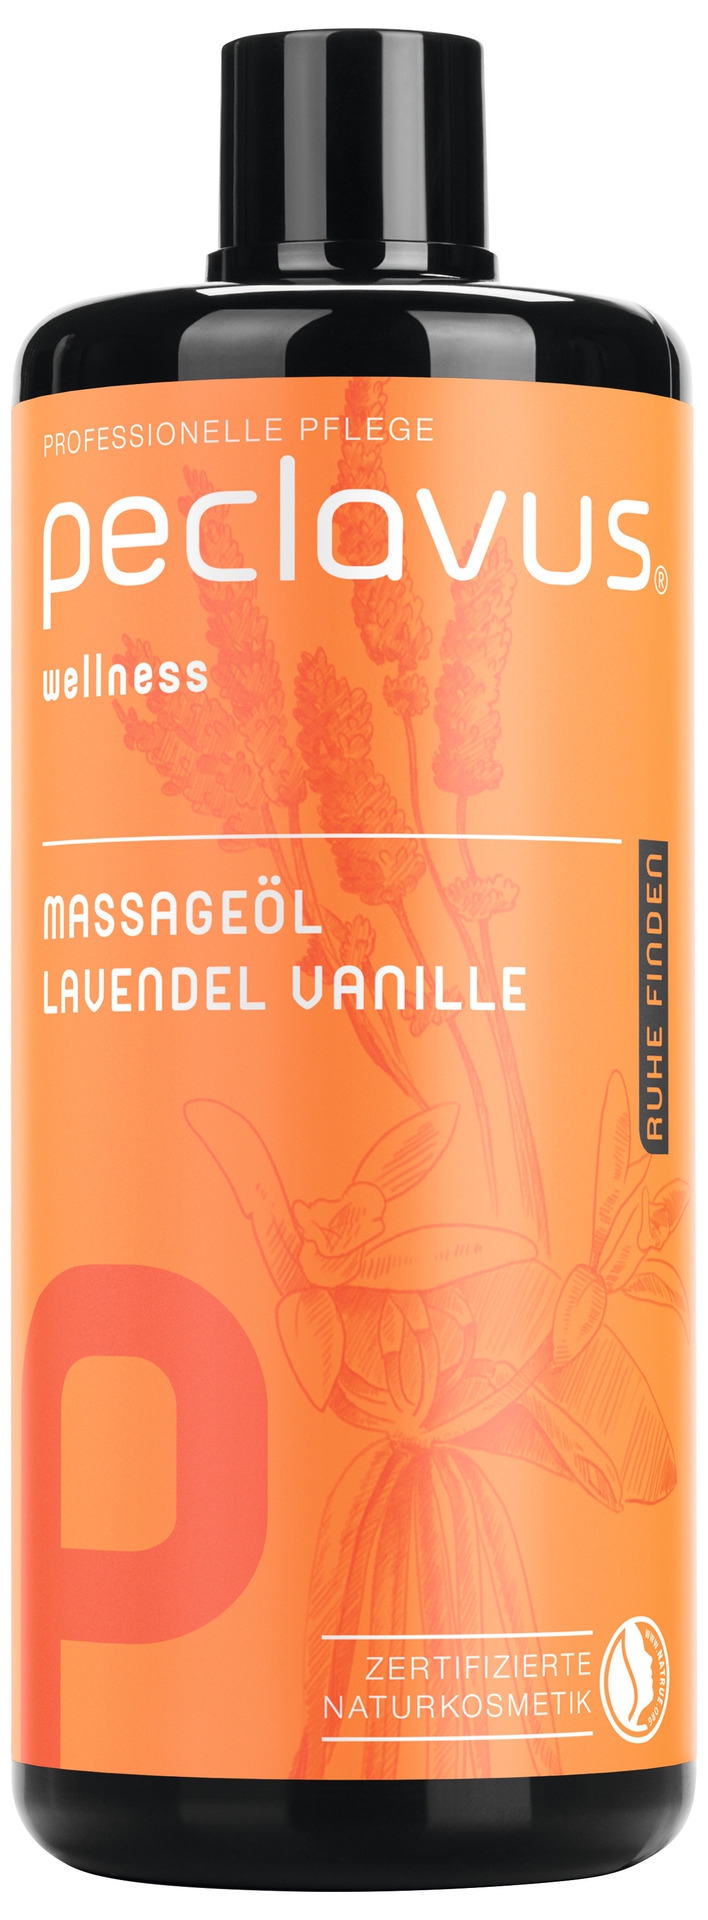 PECLAVUS Massageöl Lavendel Vanille 500 ml | Ruhe finden